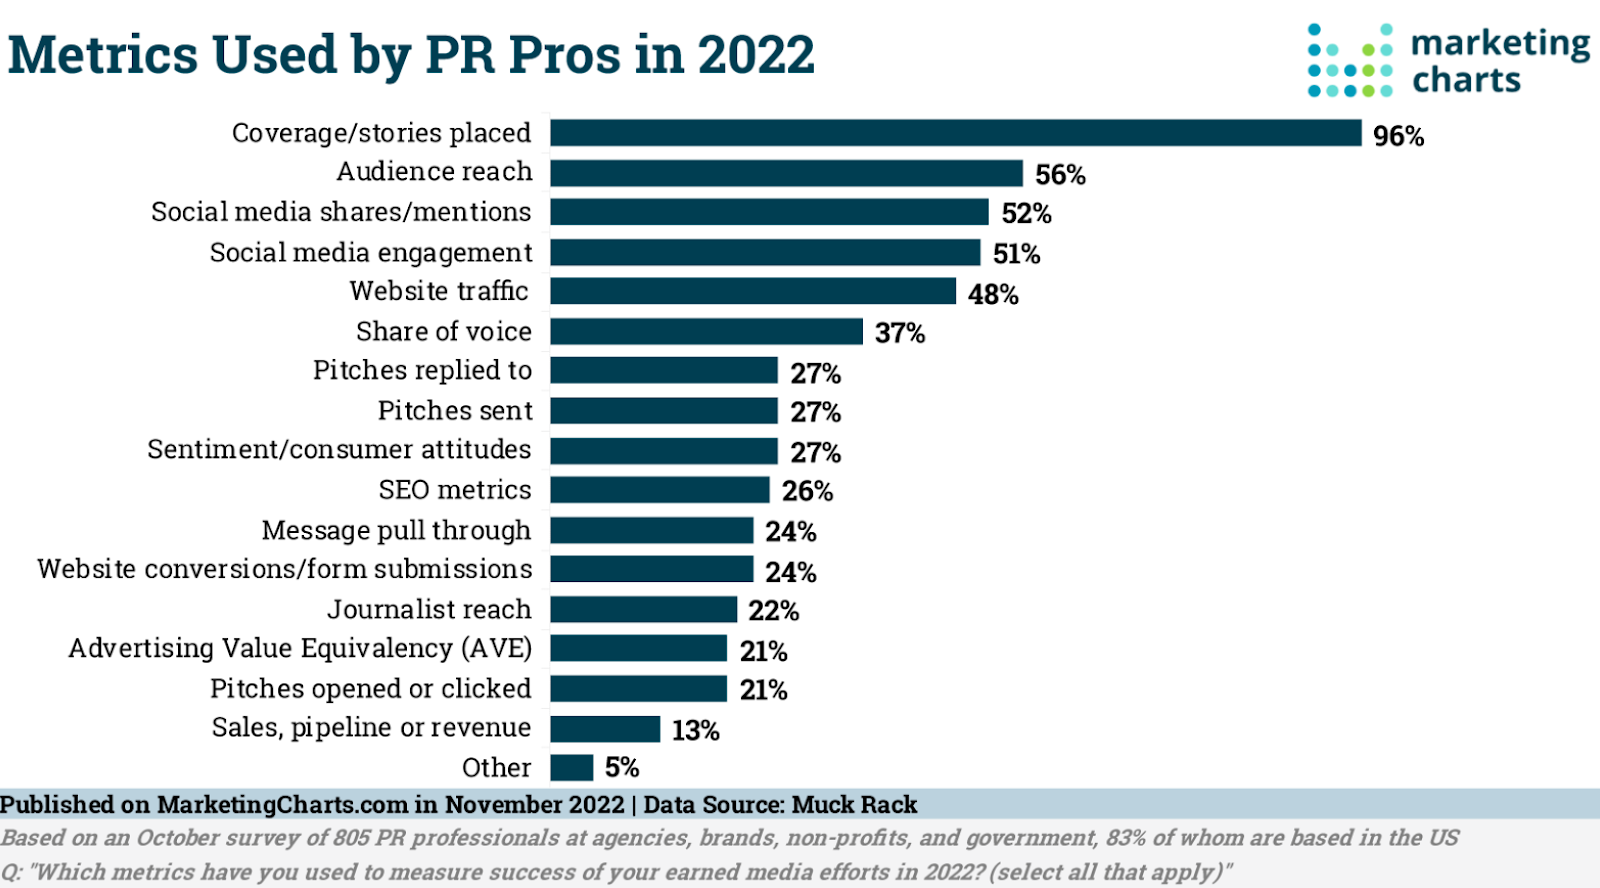 Metrics used by PR professionals